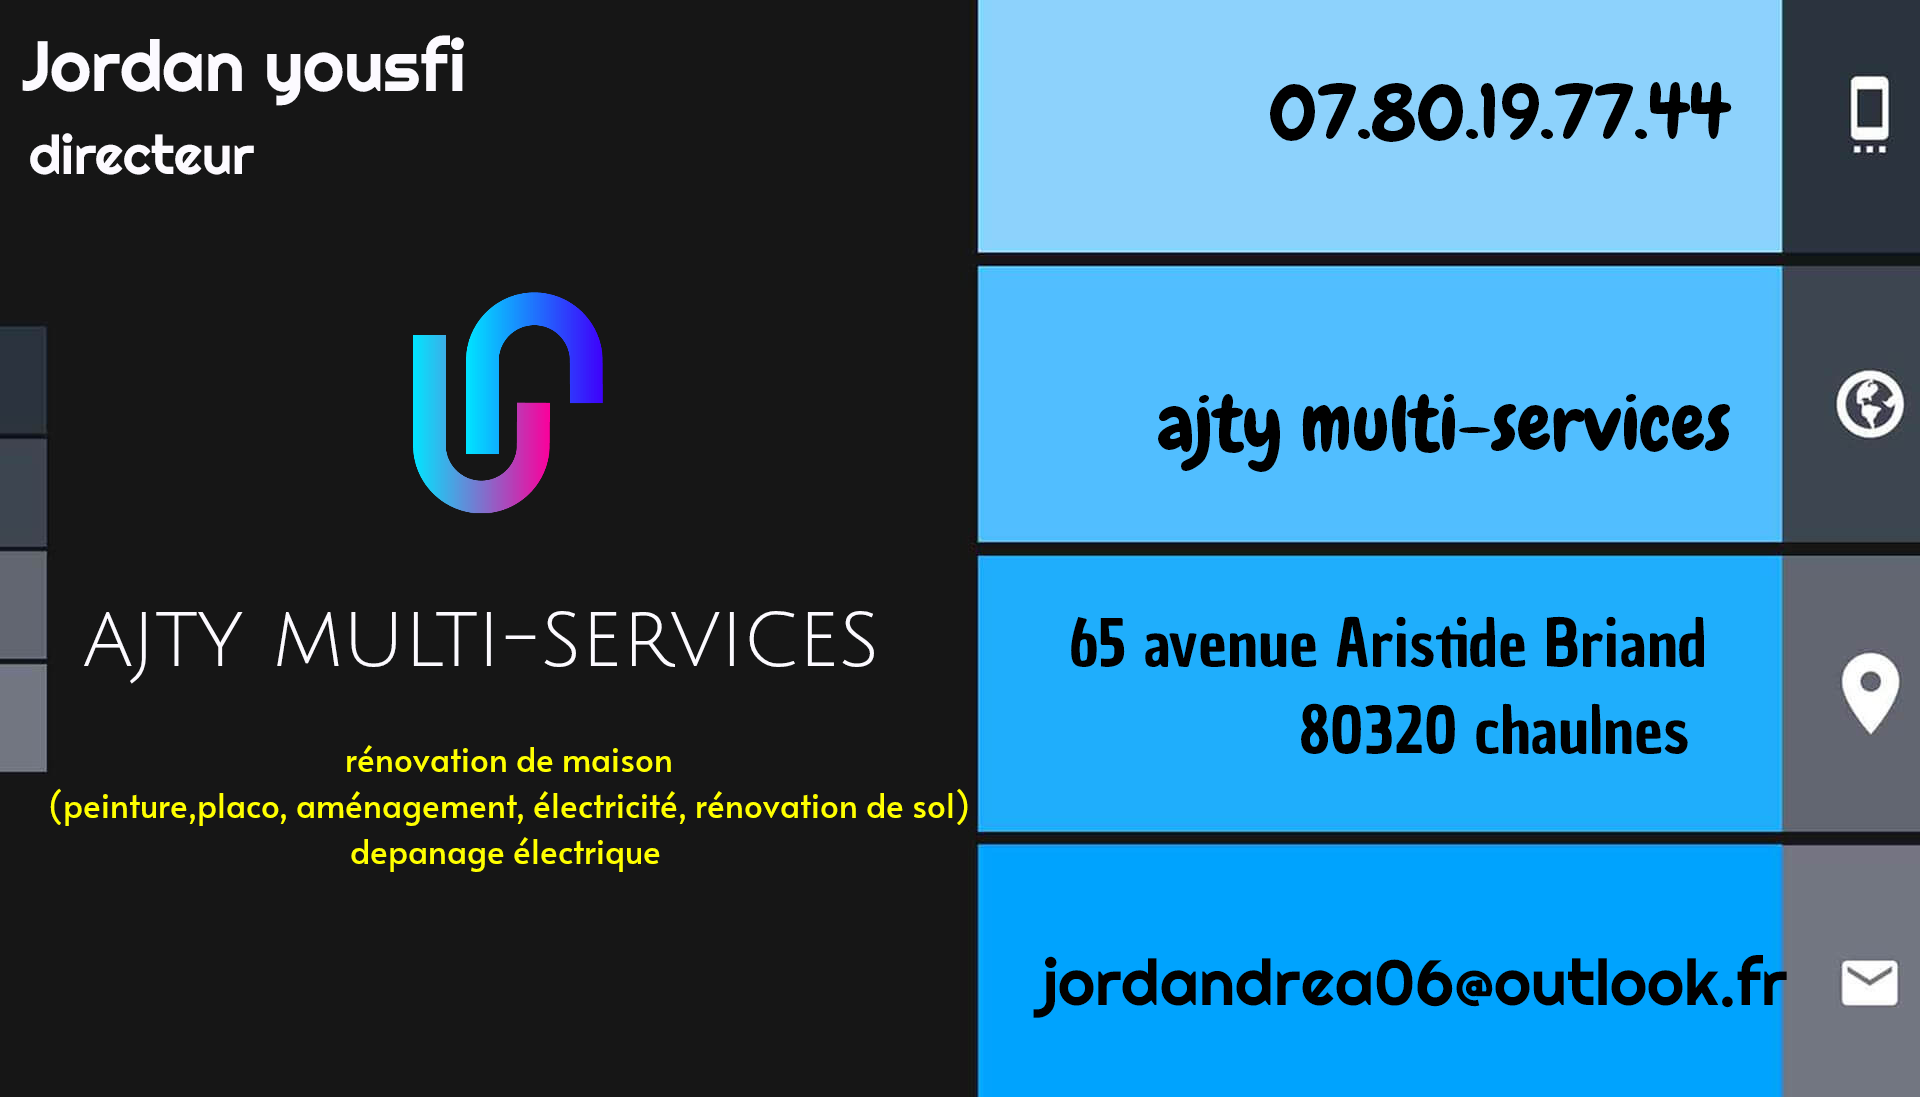 Ajty multi-services